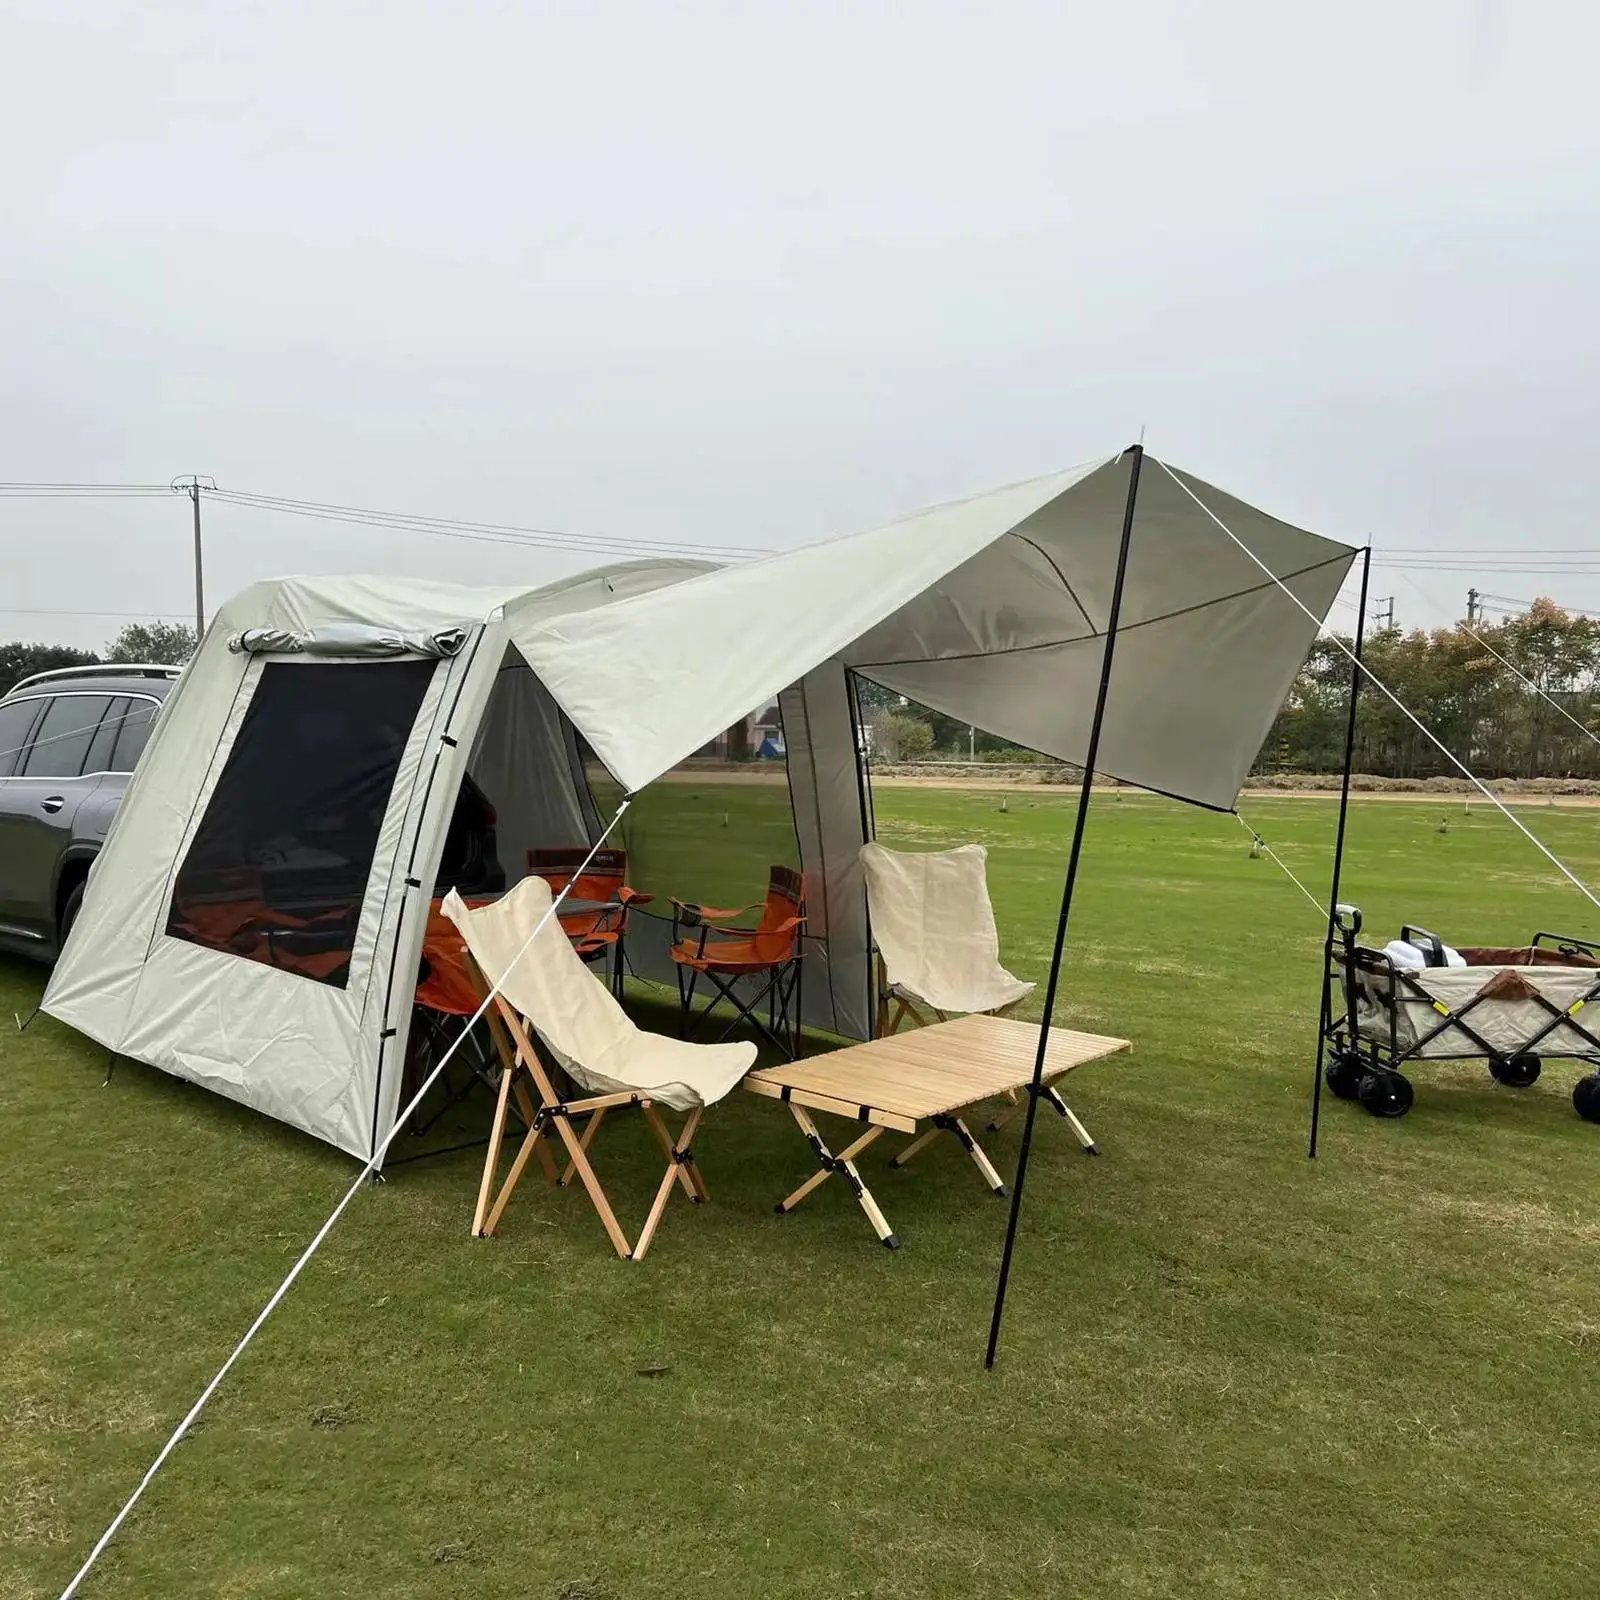 Car Trunk Tent Rainproof Camping Shelter Extension Trailer Tent Anti UV